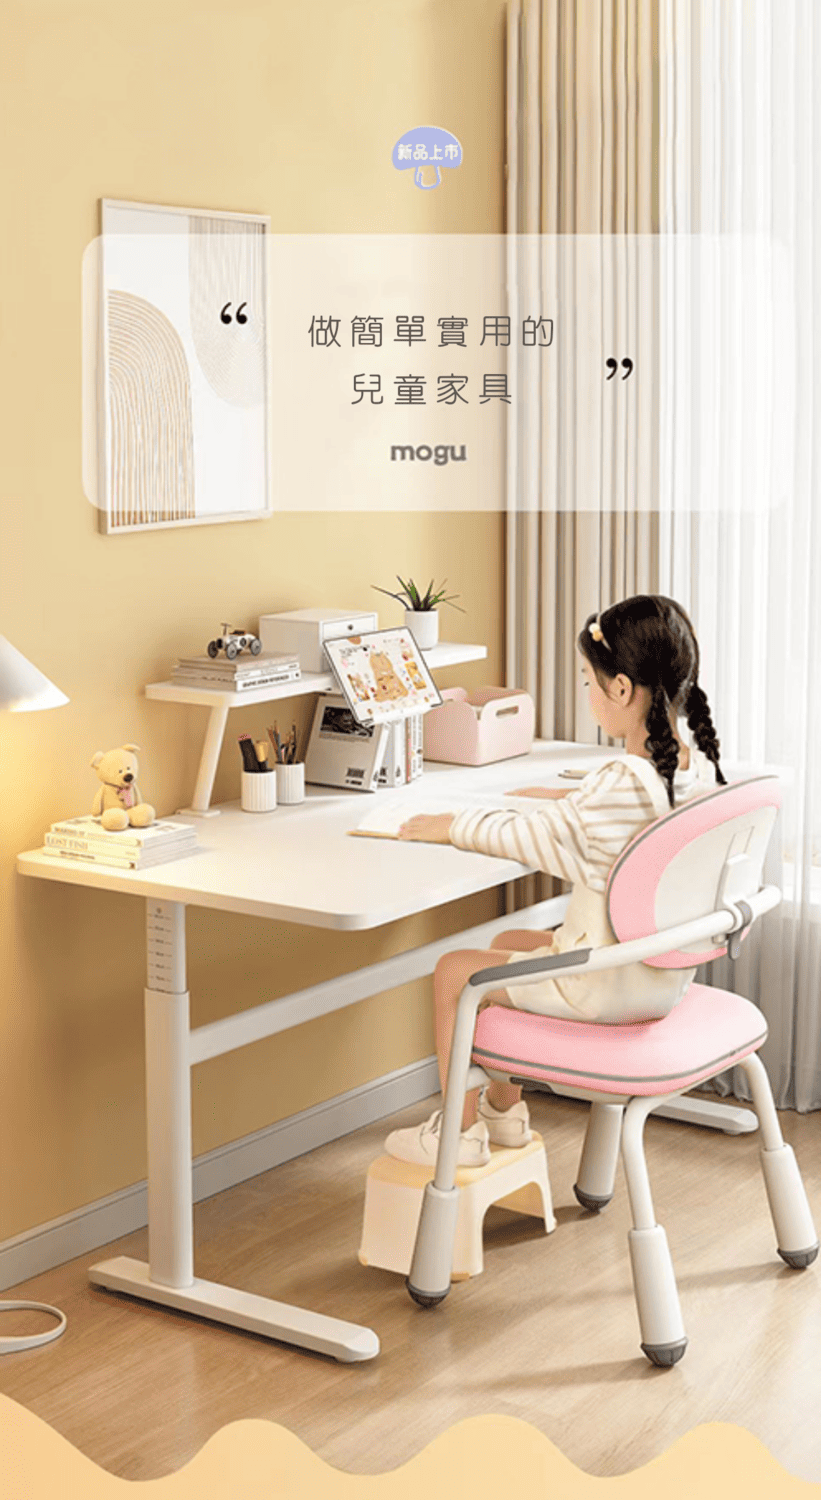 YOKA佑客家具 可調成長兒童桌椅組-100cm(升降桌椅 